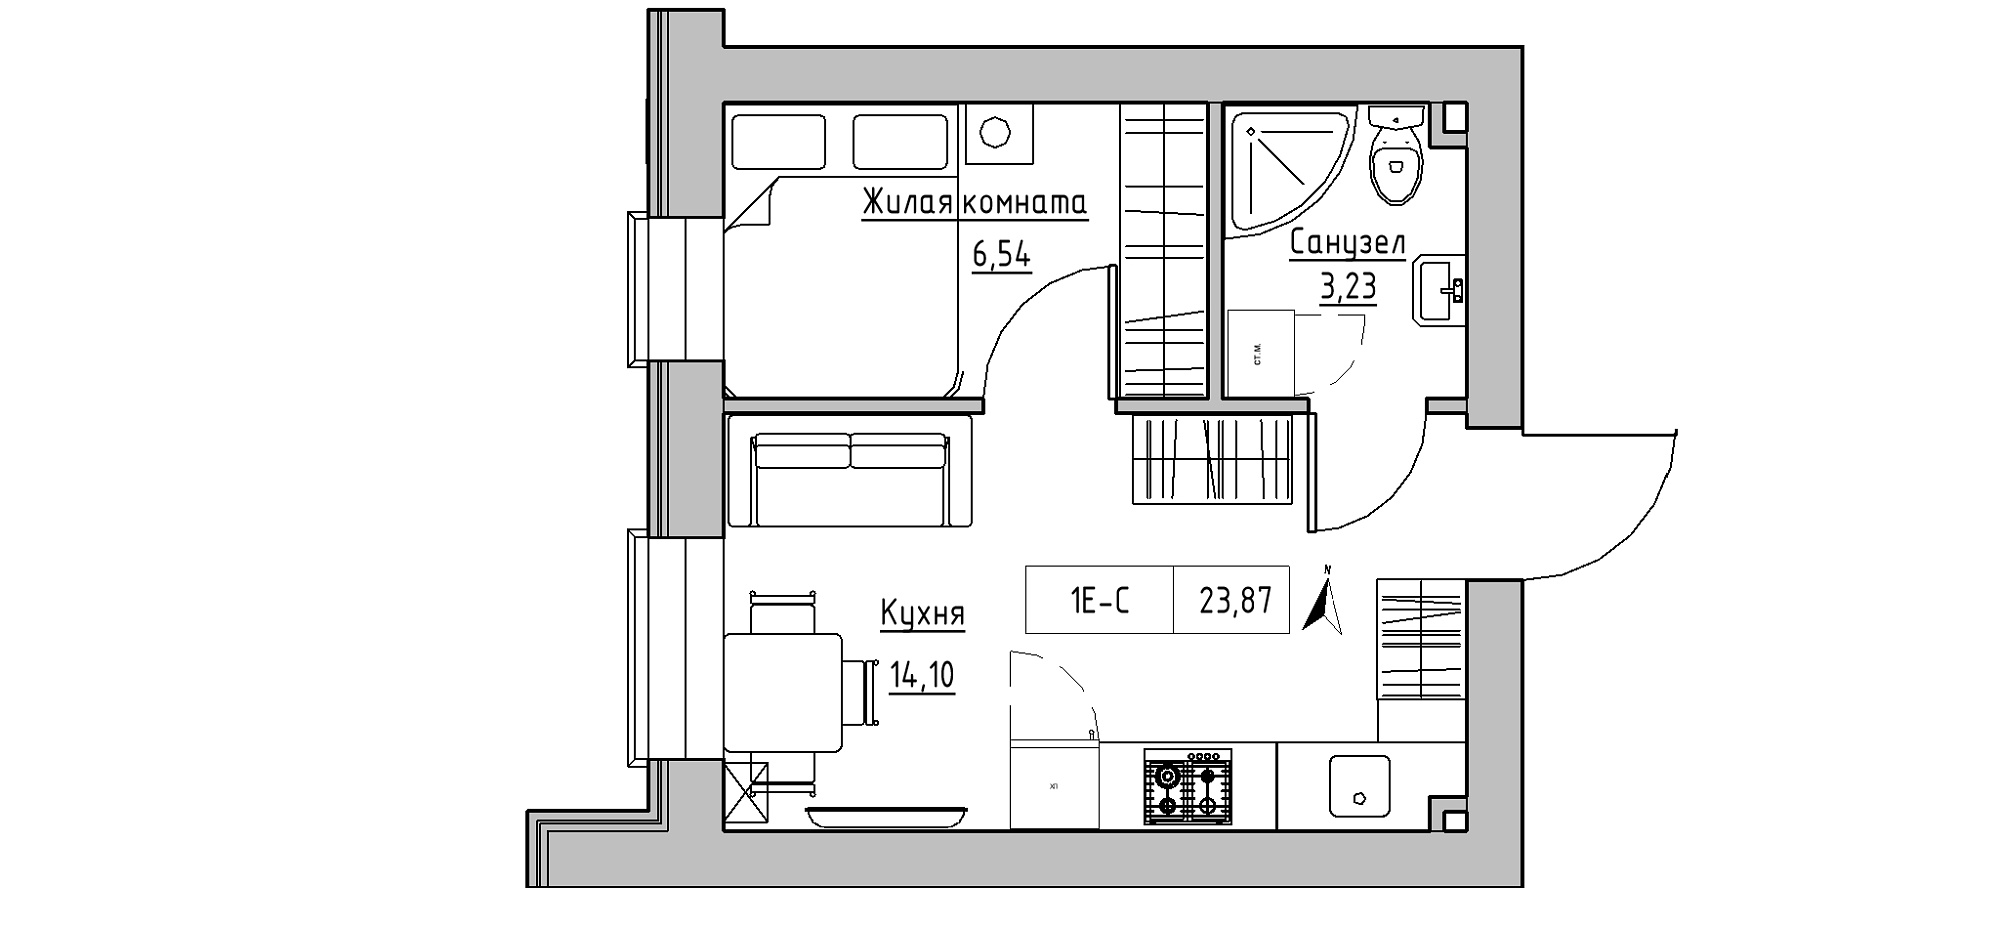 Planning 1-rm flats area 23.87m2, KS-020-02/0012.